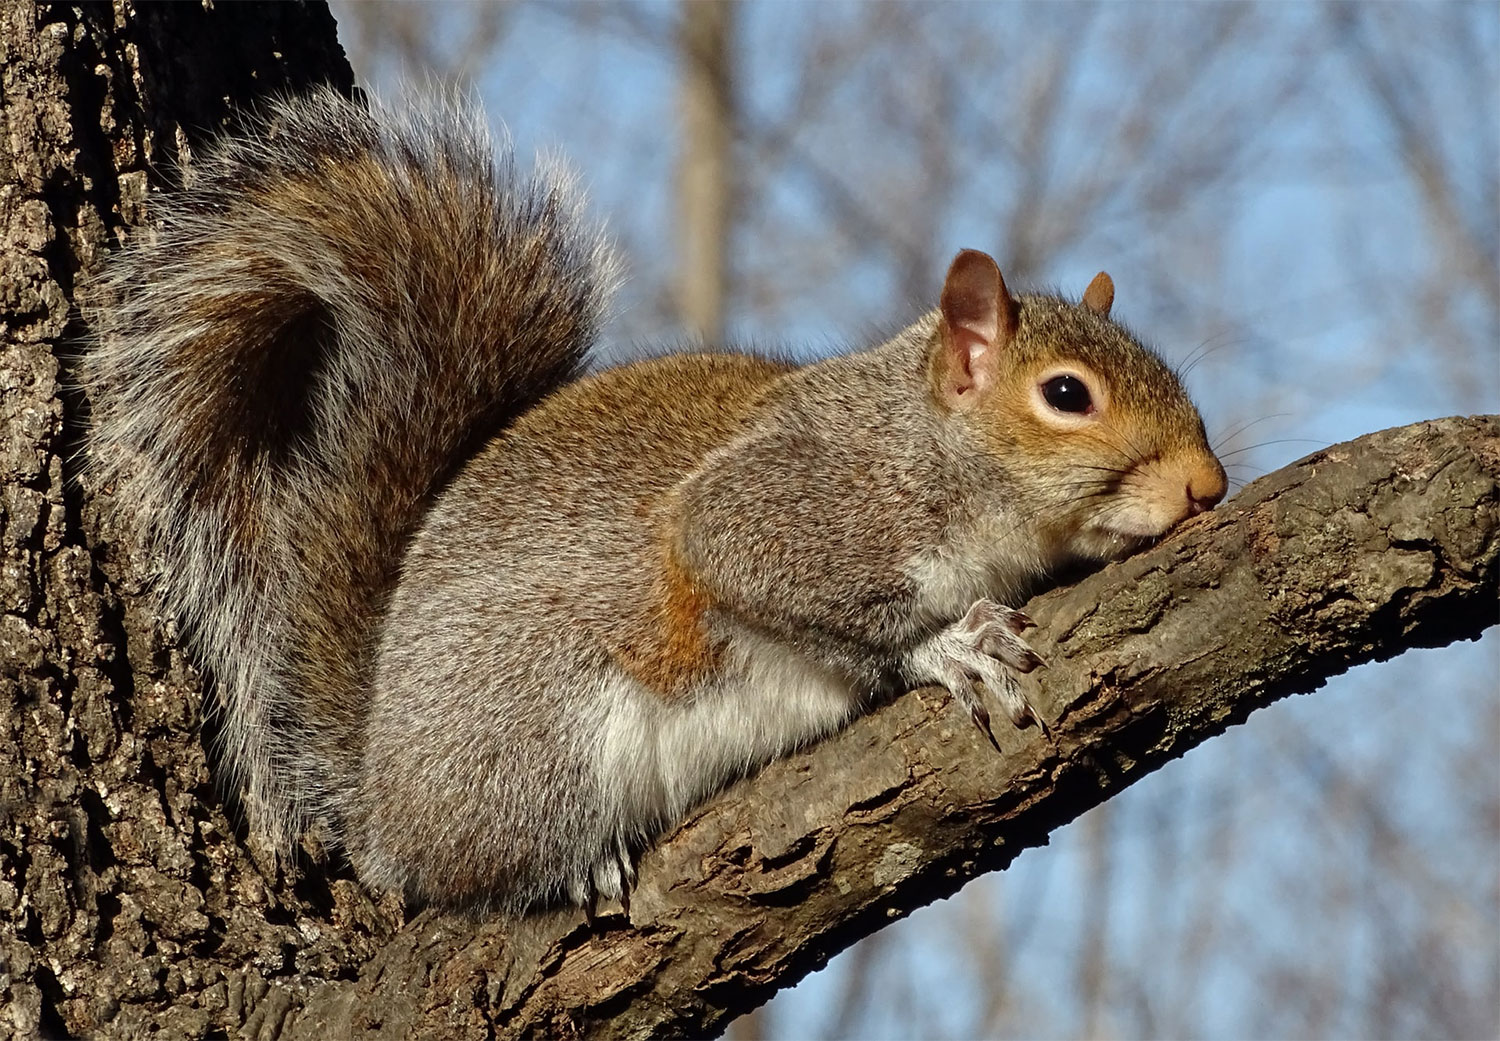 squirrel on tree baranch